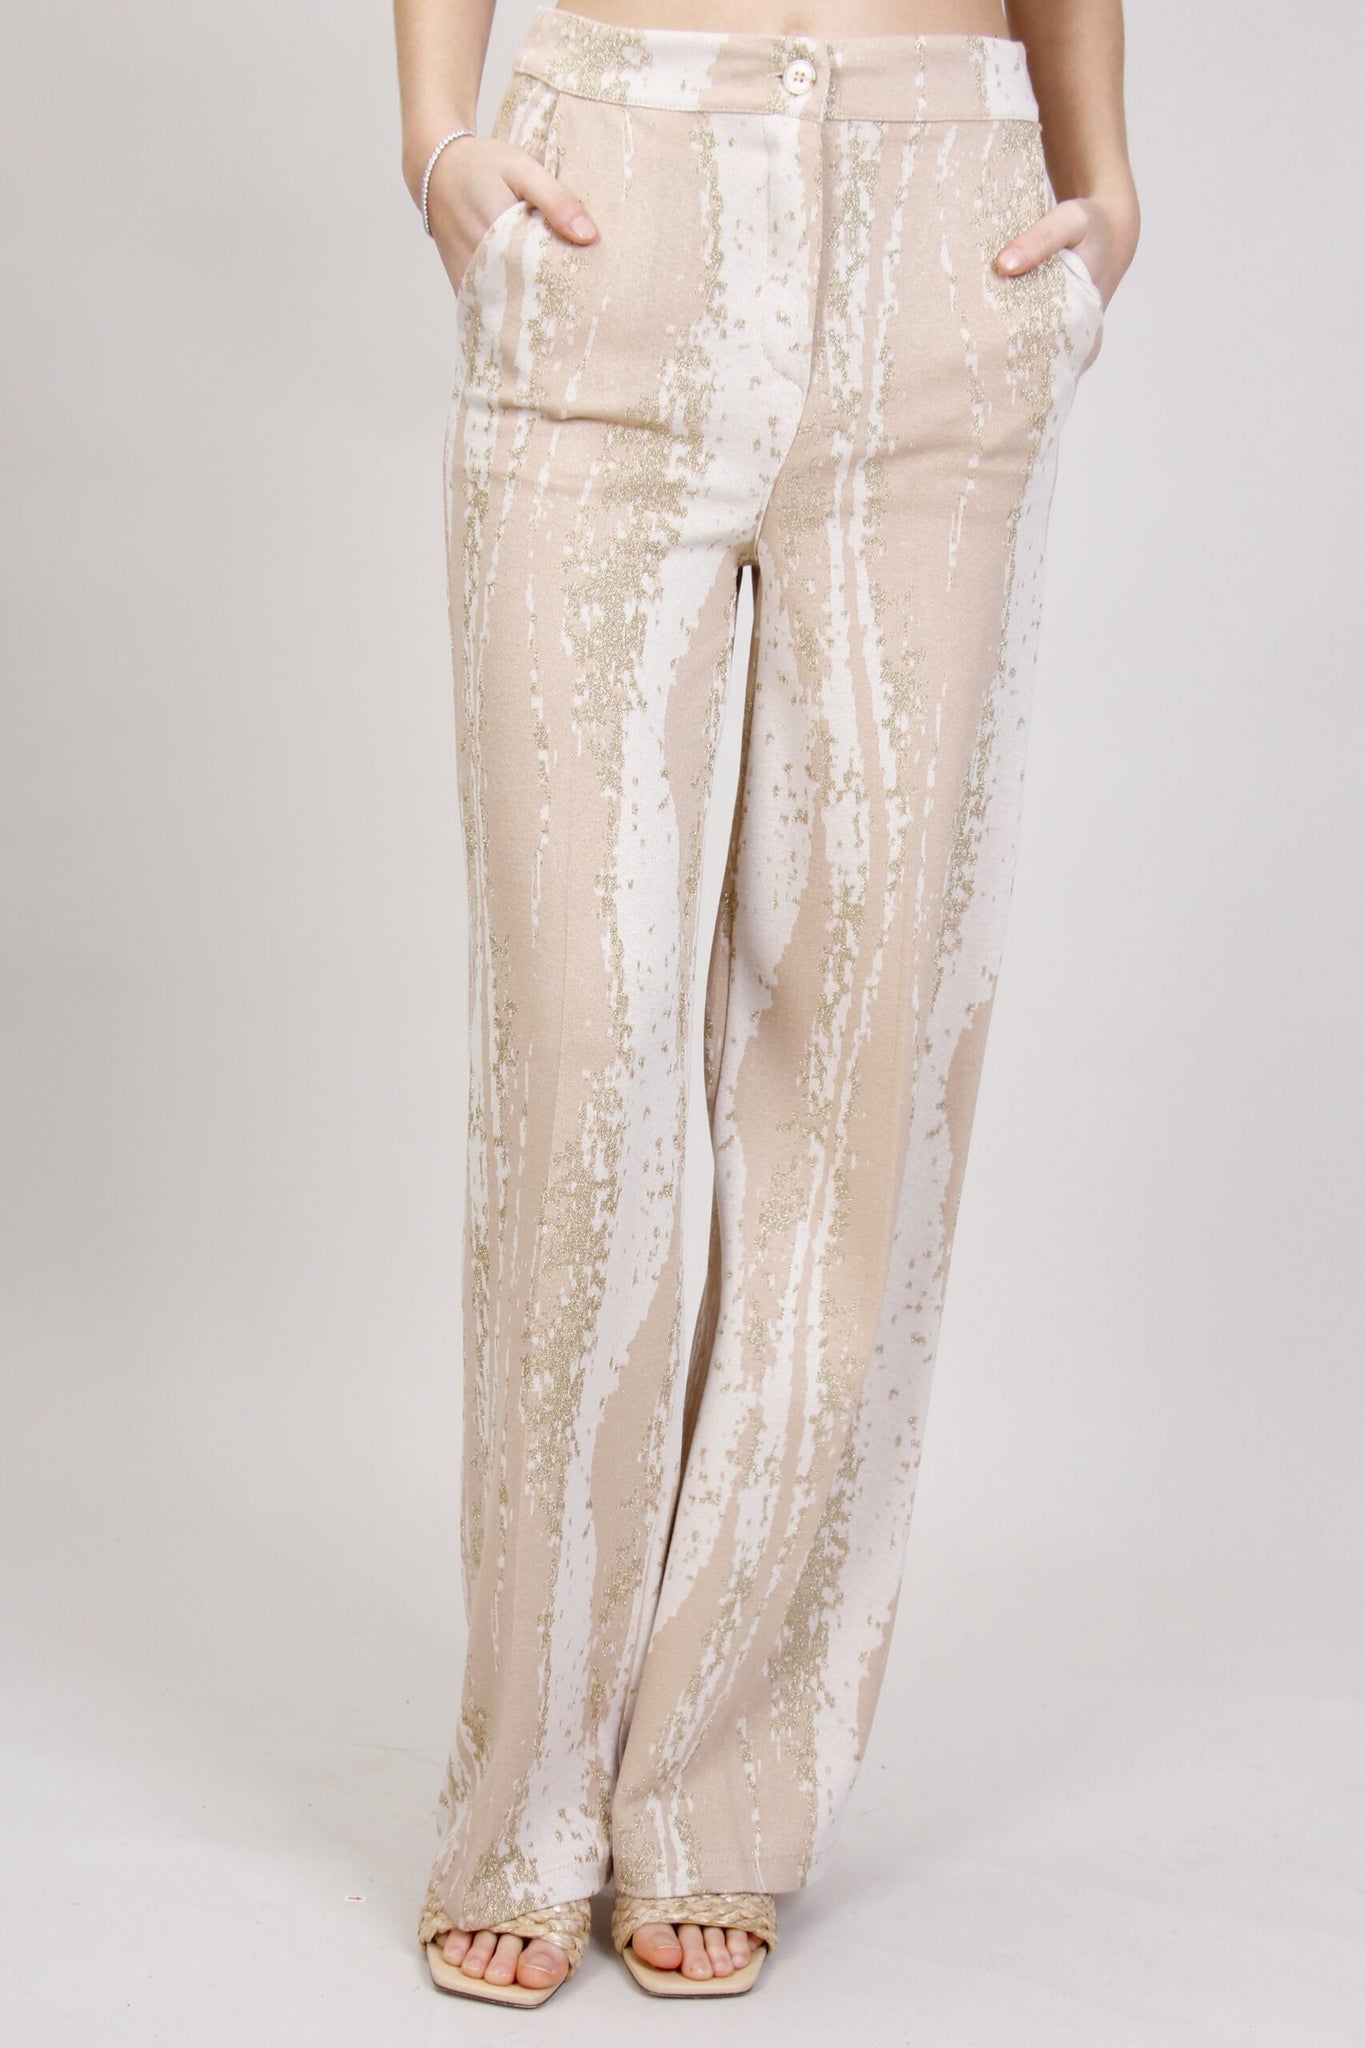 Beige pants with art lurex details